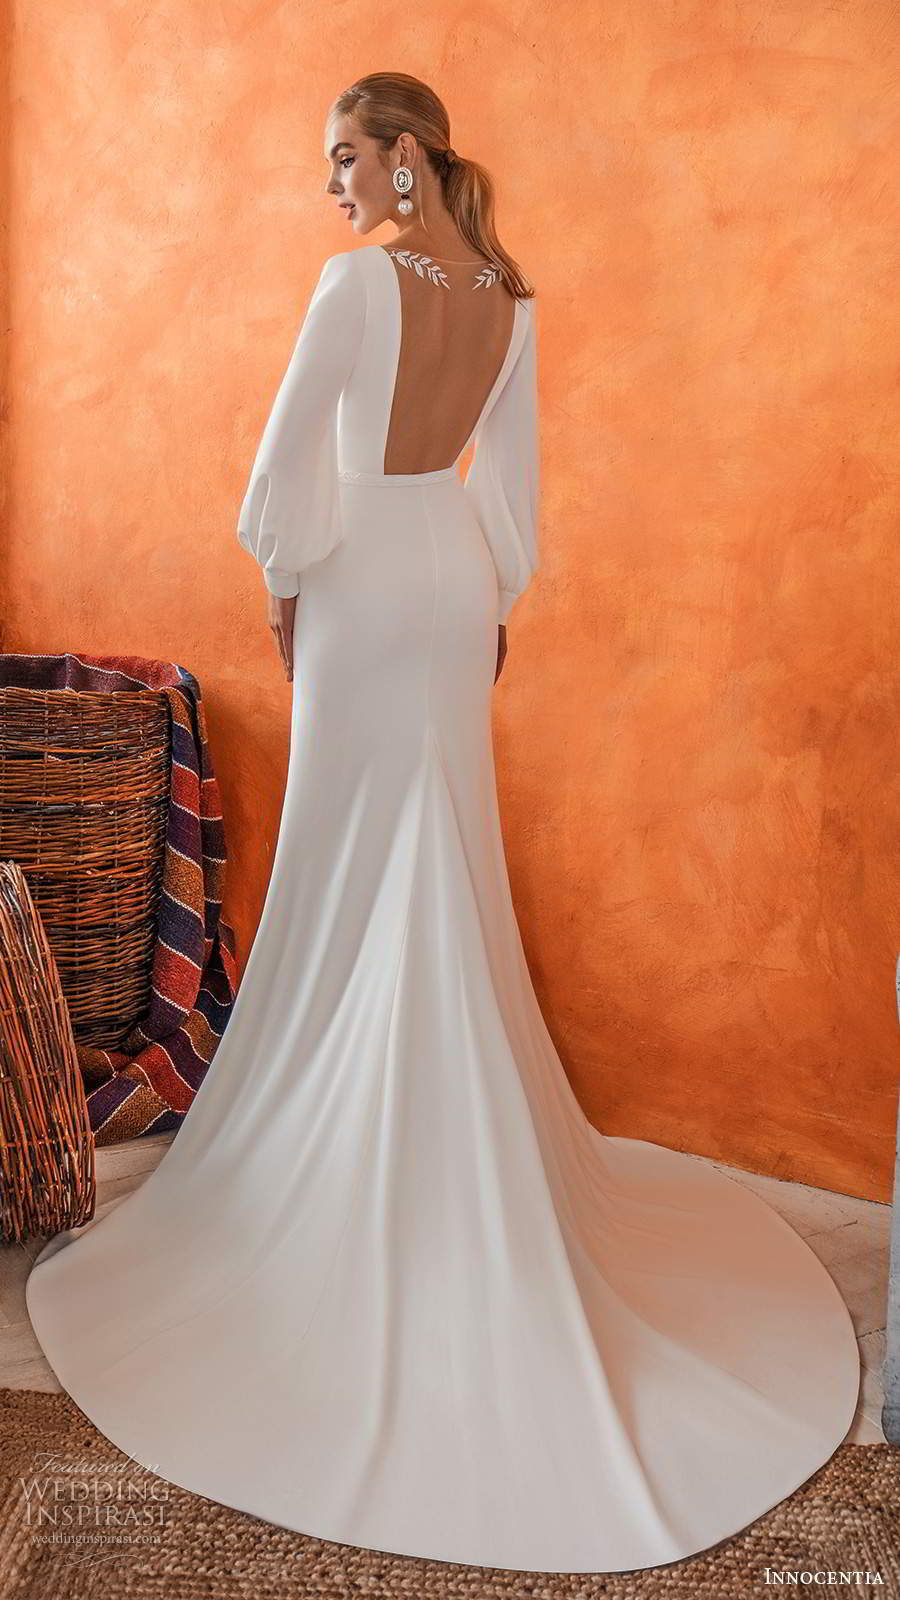 innocentia 2021 bridal long bishop sleeves v neckline clean minimalist simple sheath wedding dress chapel train (11) bv